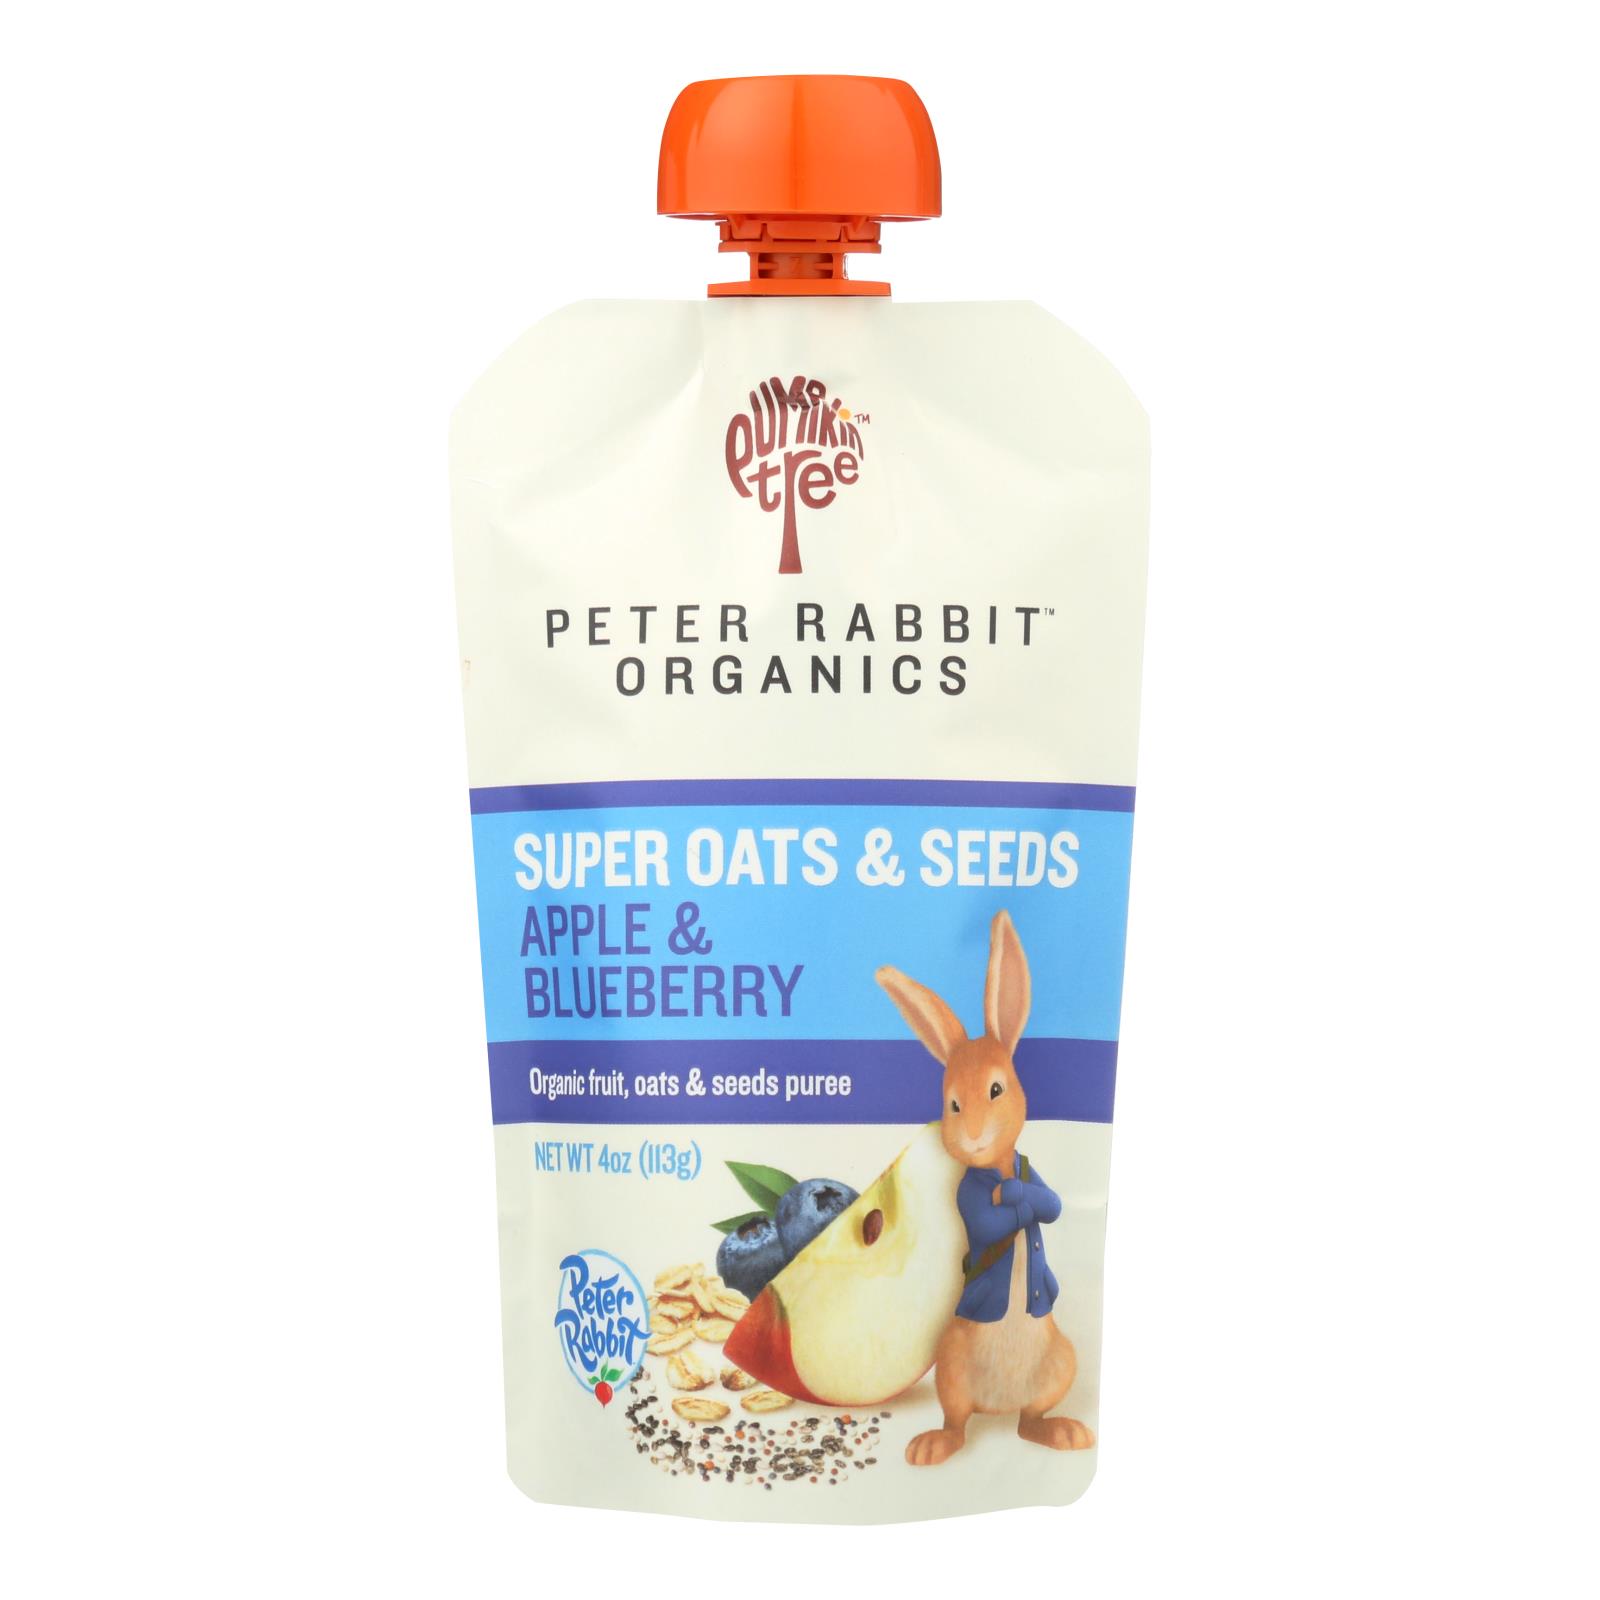 Peter Rabbit Organics - Oats&seeds Apl&blueb - 10개 묶음상품 - 4 OZ